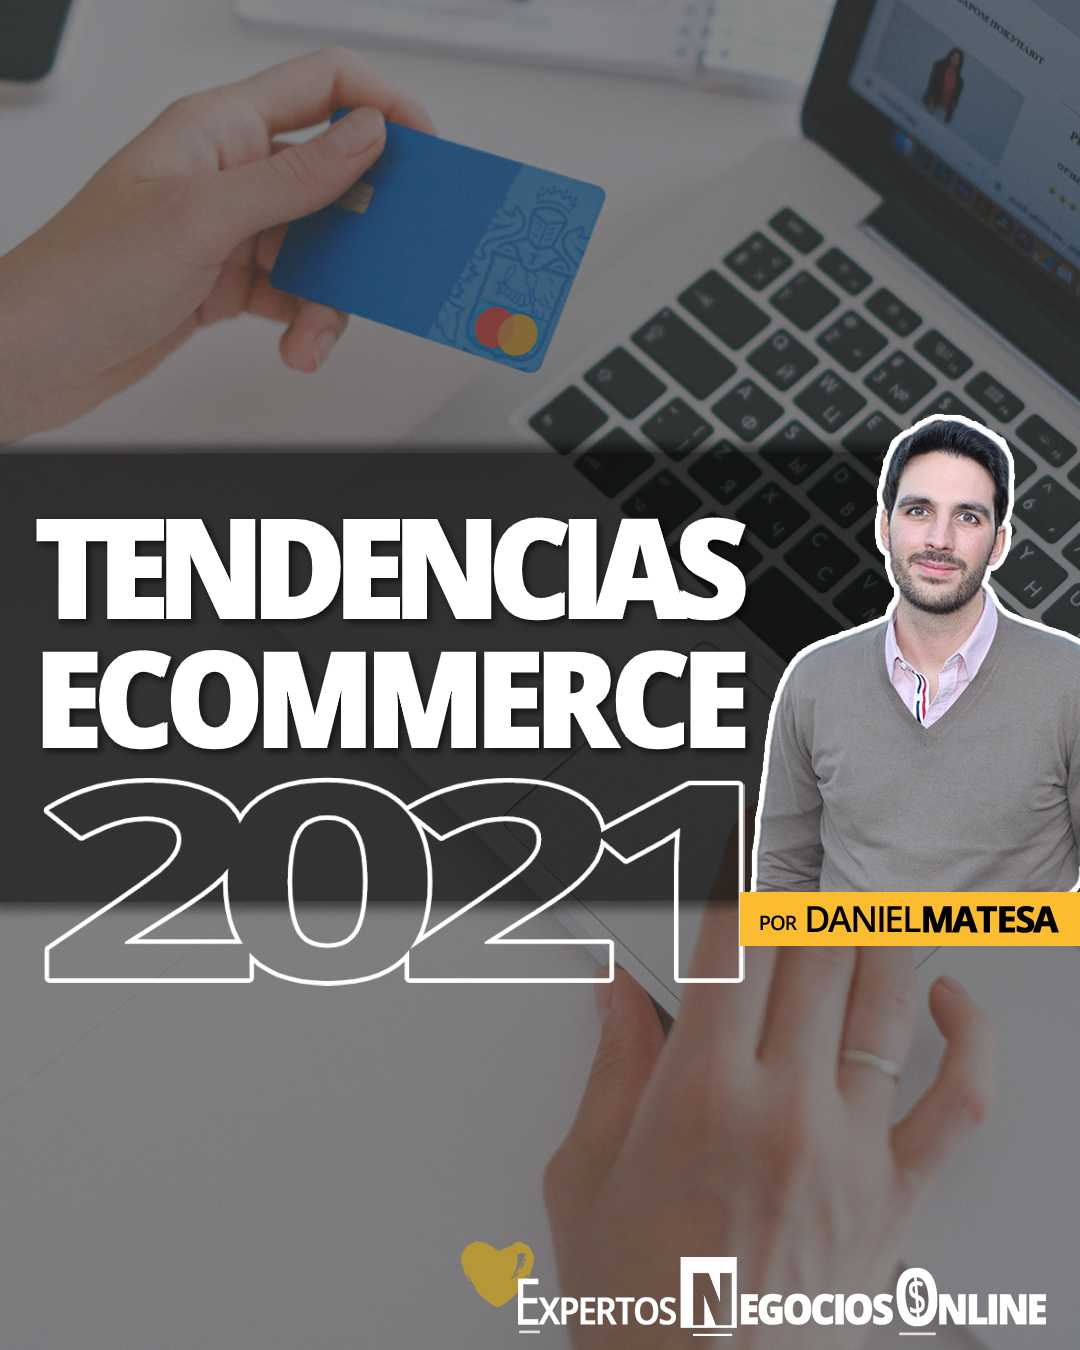 tendencias ecommerce 2021 - Novedades comercio electronico 2021